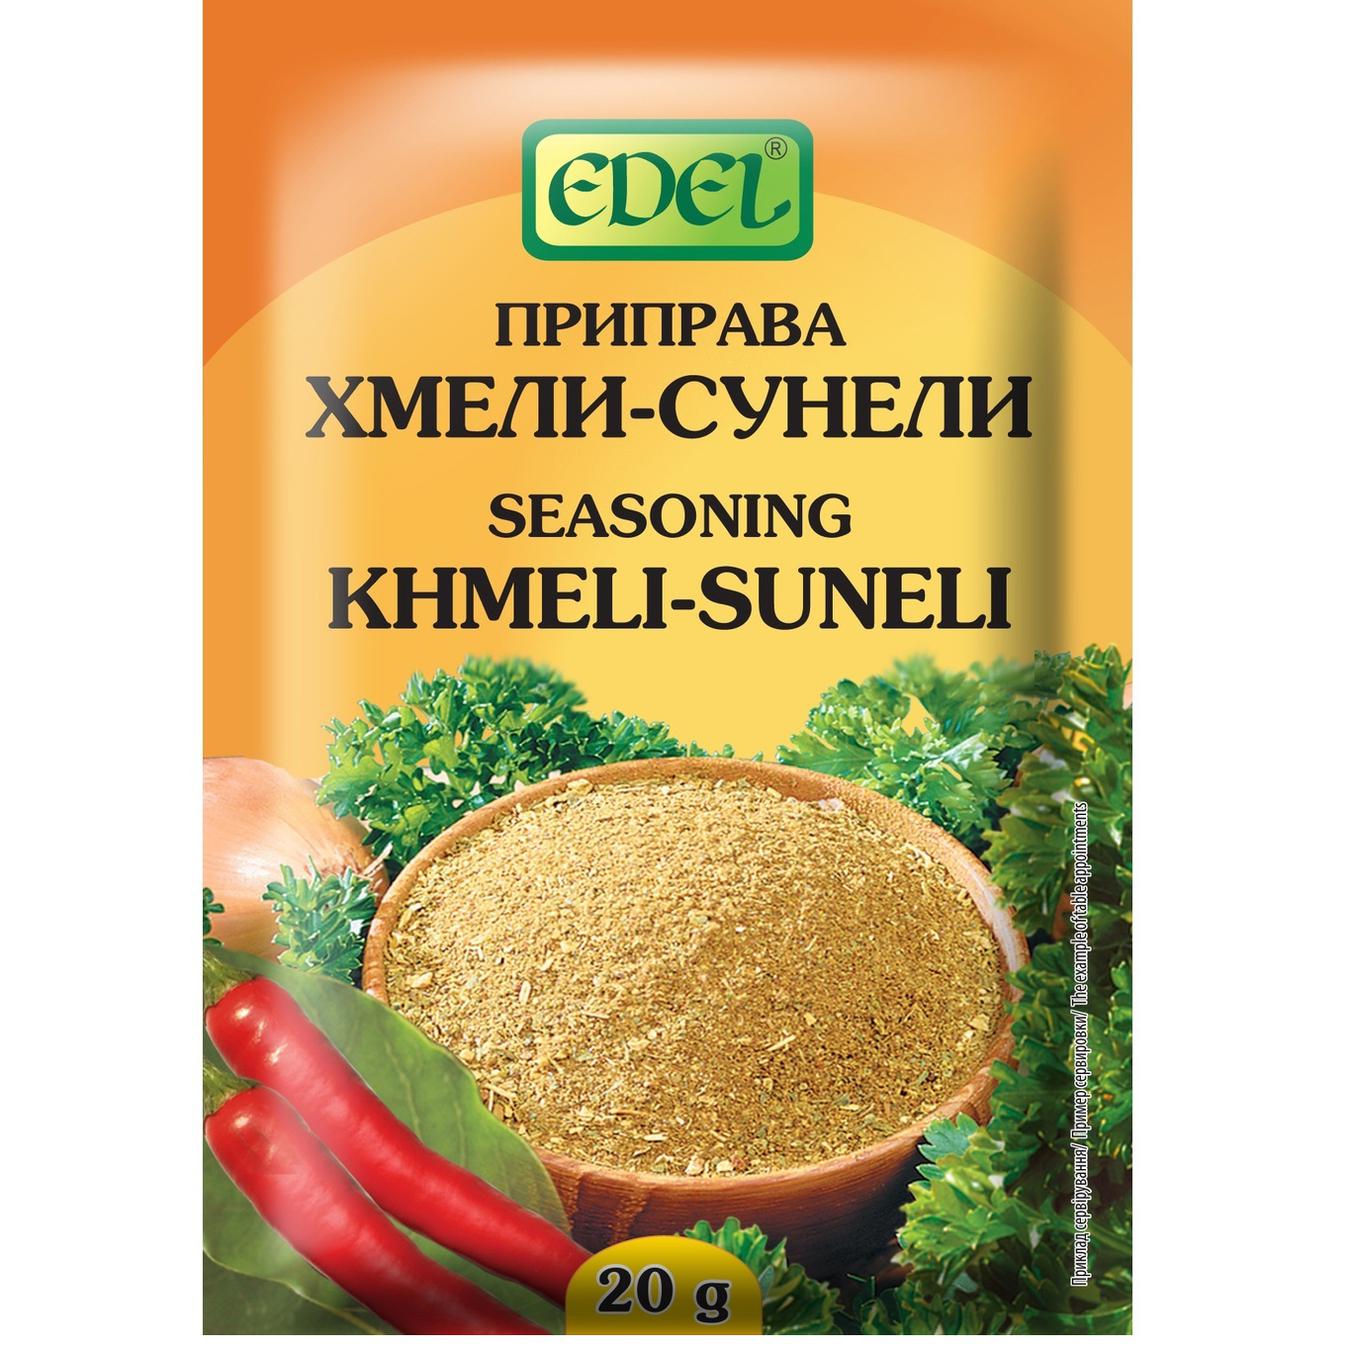 Edel Khmeli-Suneli Spice
20g